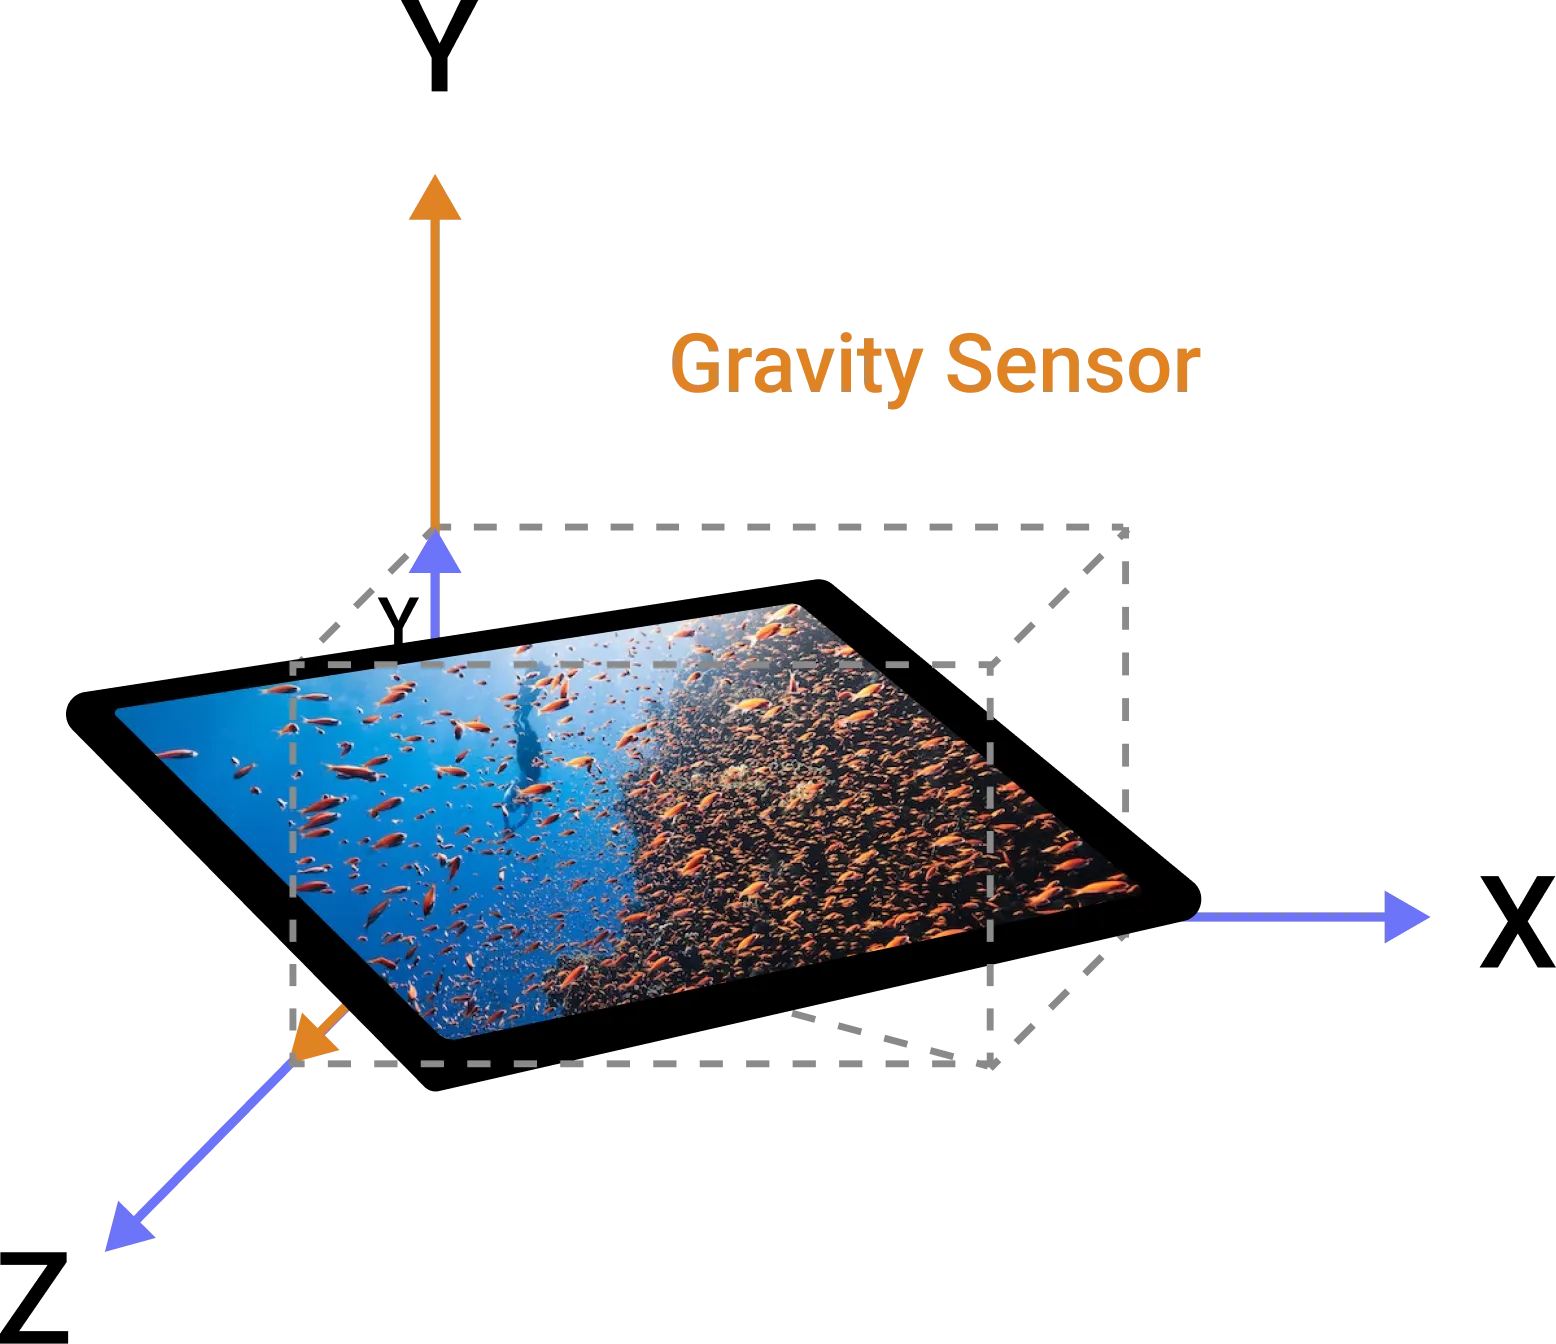 Built-in Gravity Sensor